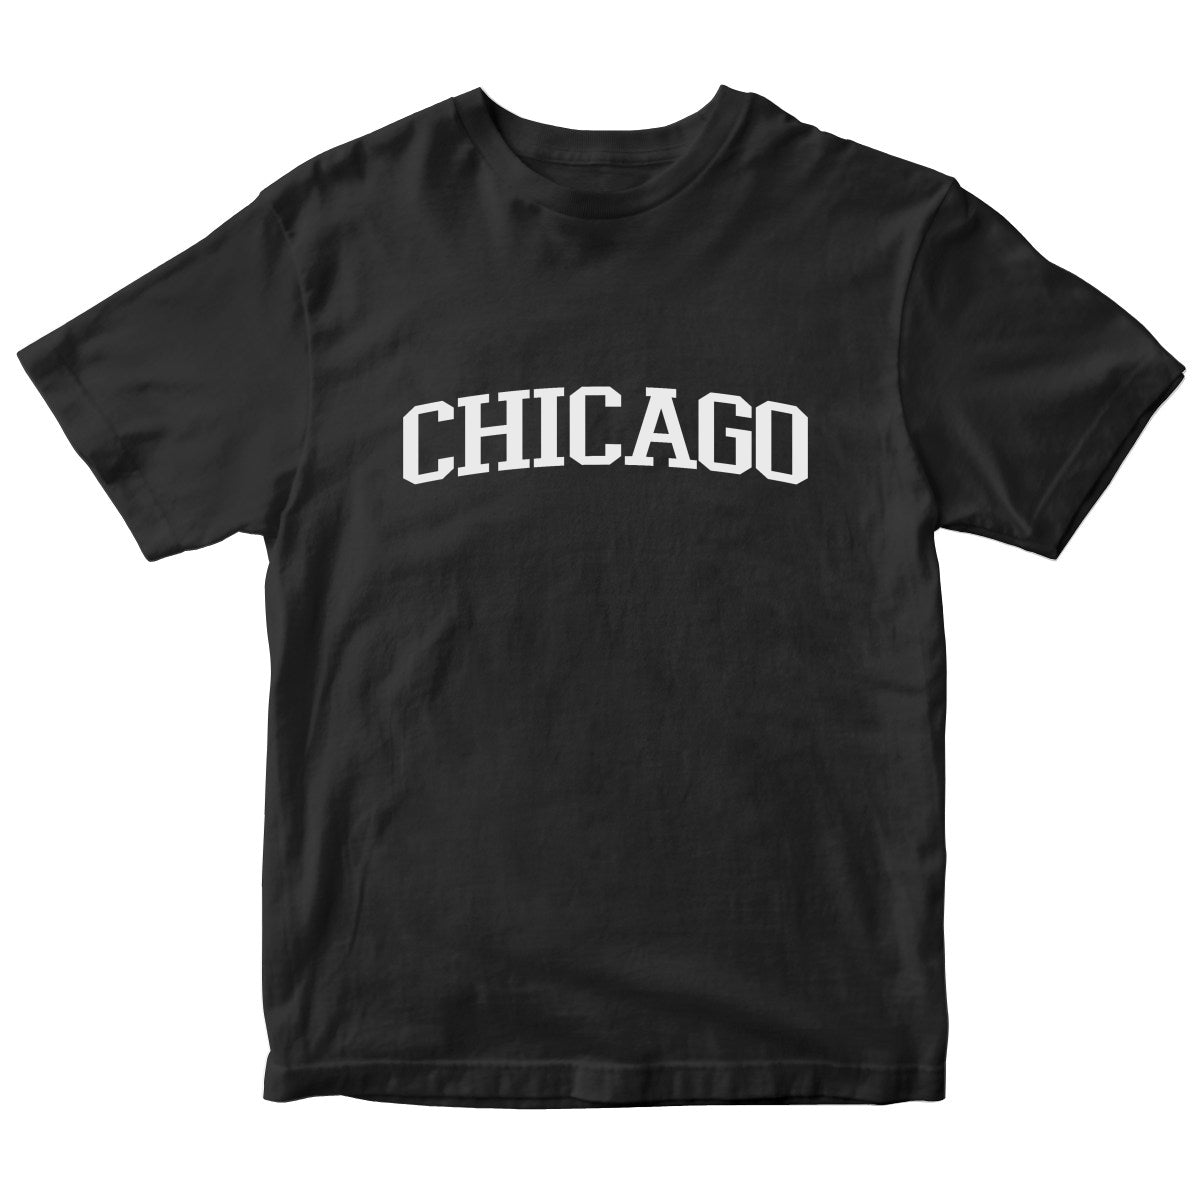 Chicago Kids T-shirt